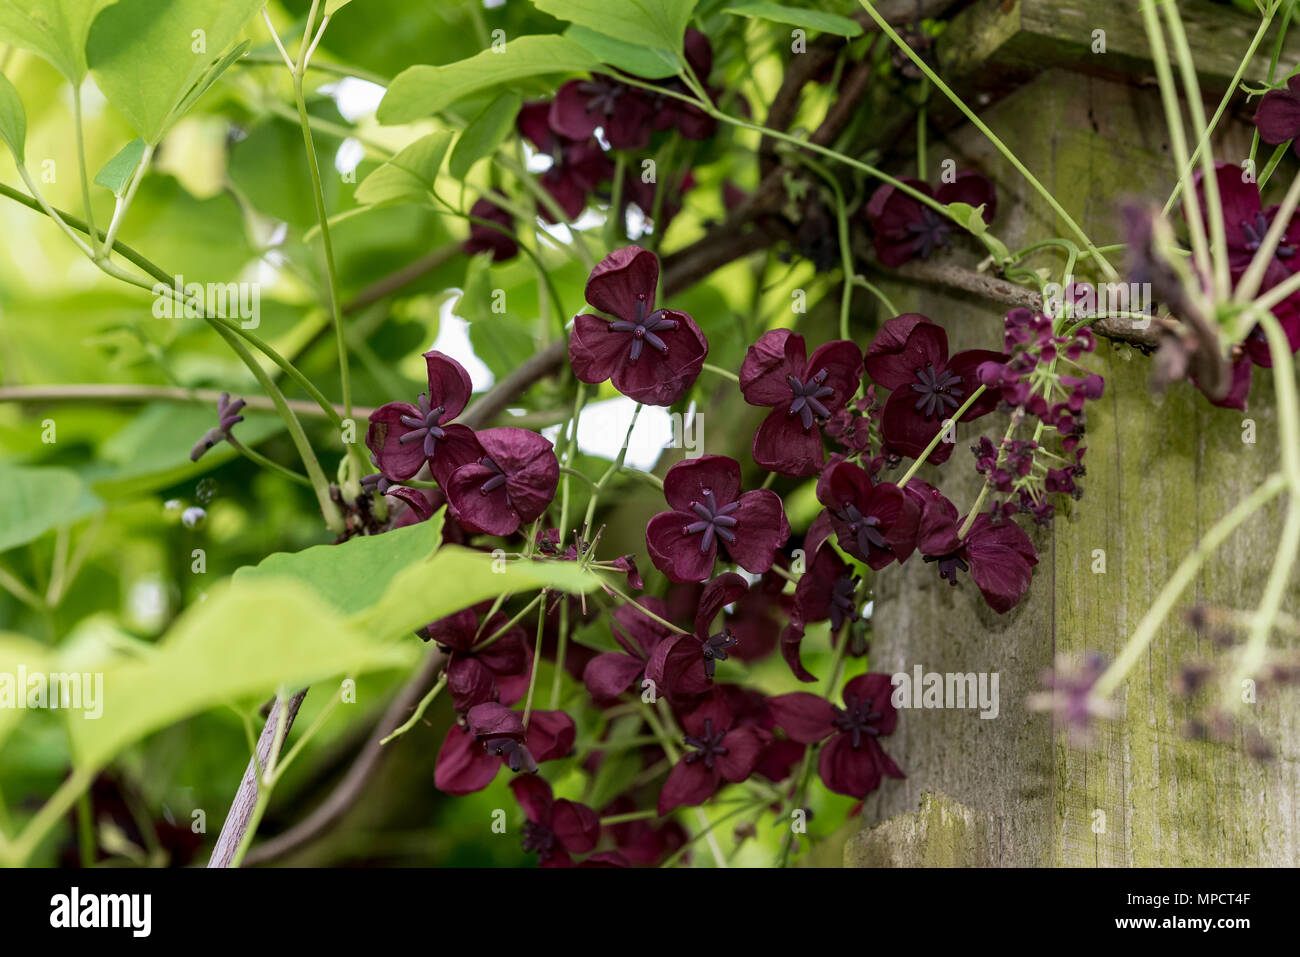 Akebia quinata, Chocolate vid, flores púrpura. Foto de stock